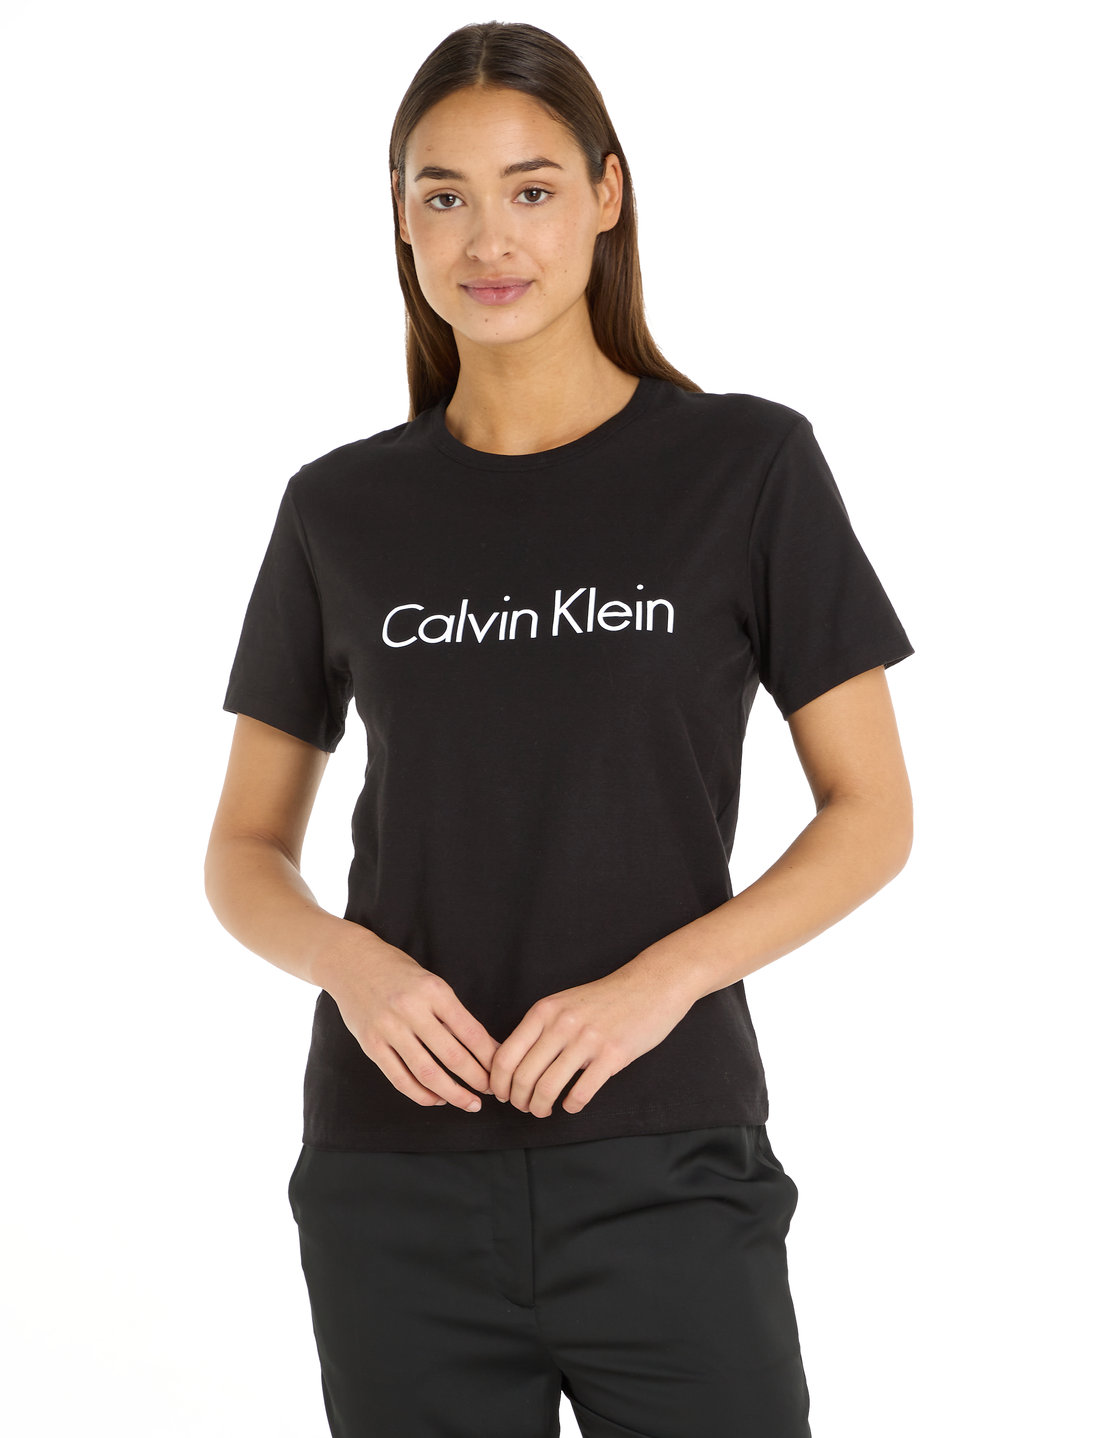 Calvin Klein S/s Crew Neck - Oberteile